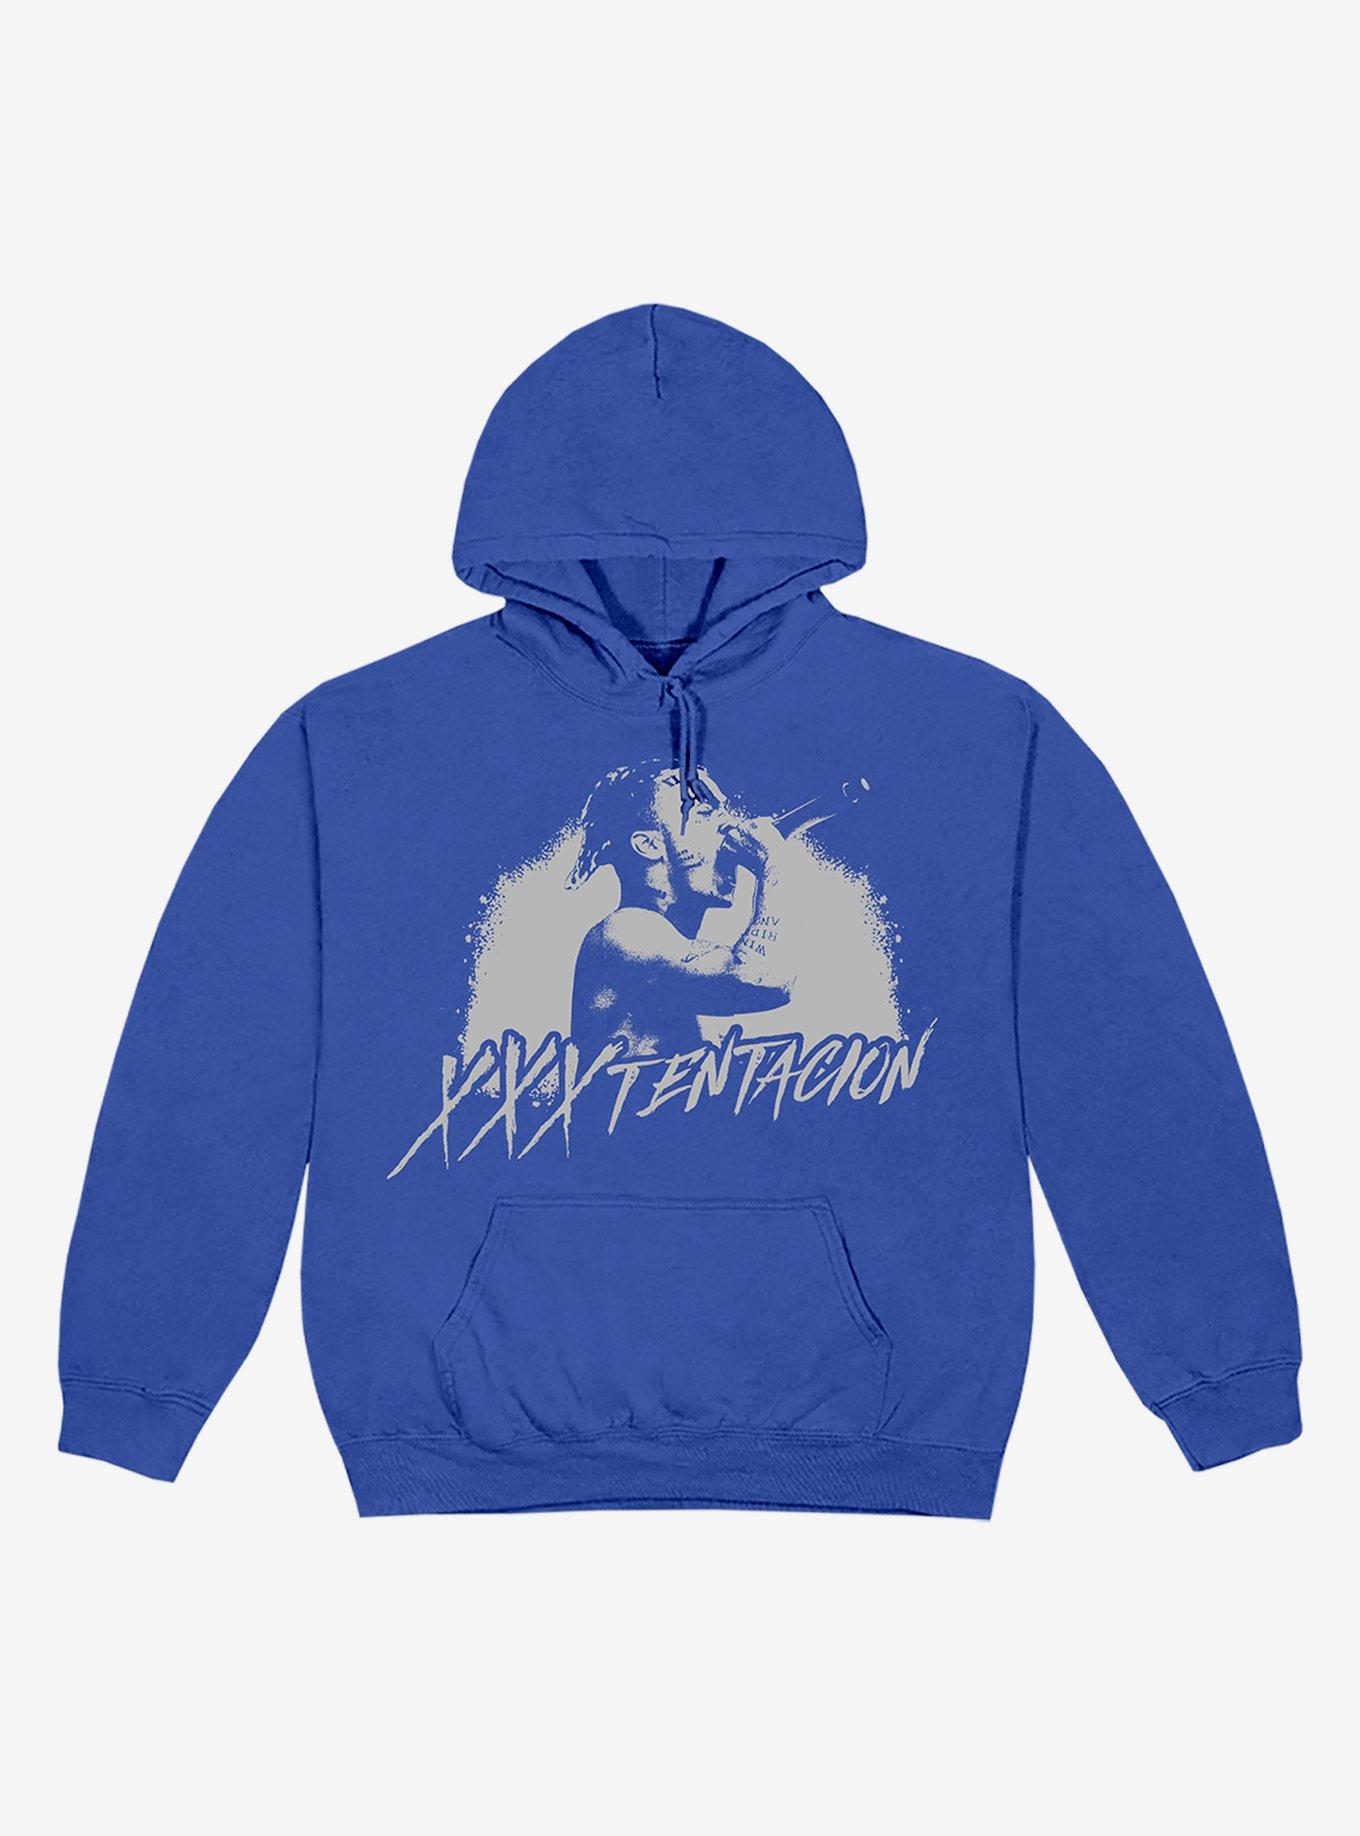 OFFICIAL XXXTentacion Shirts and Merchandise | Hot Topic